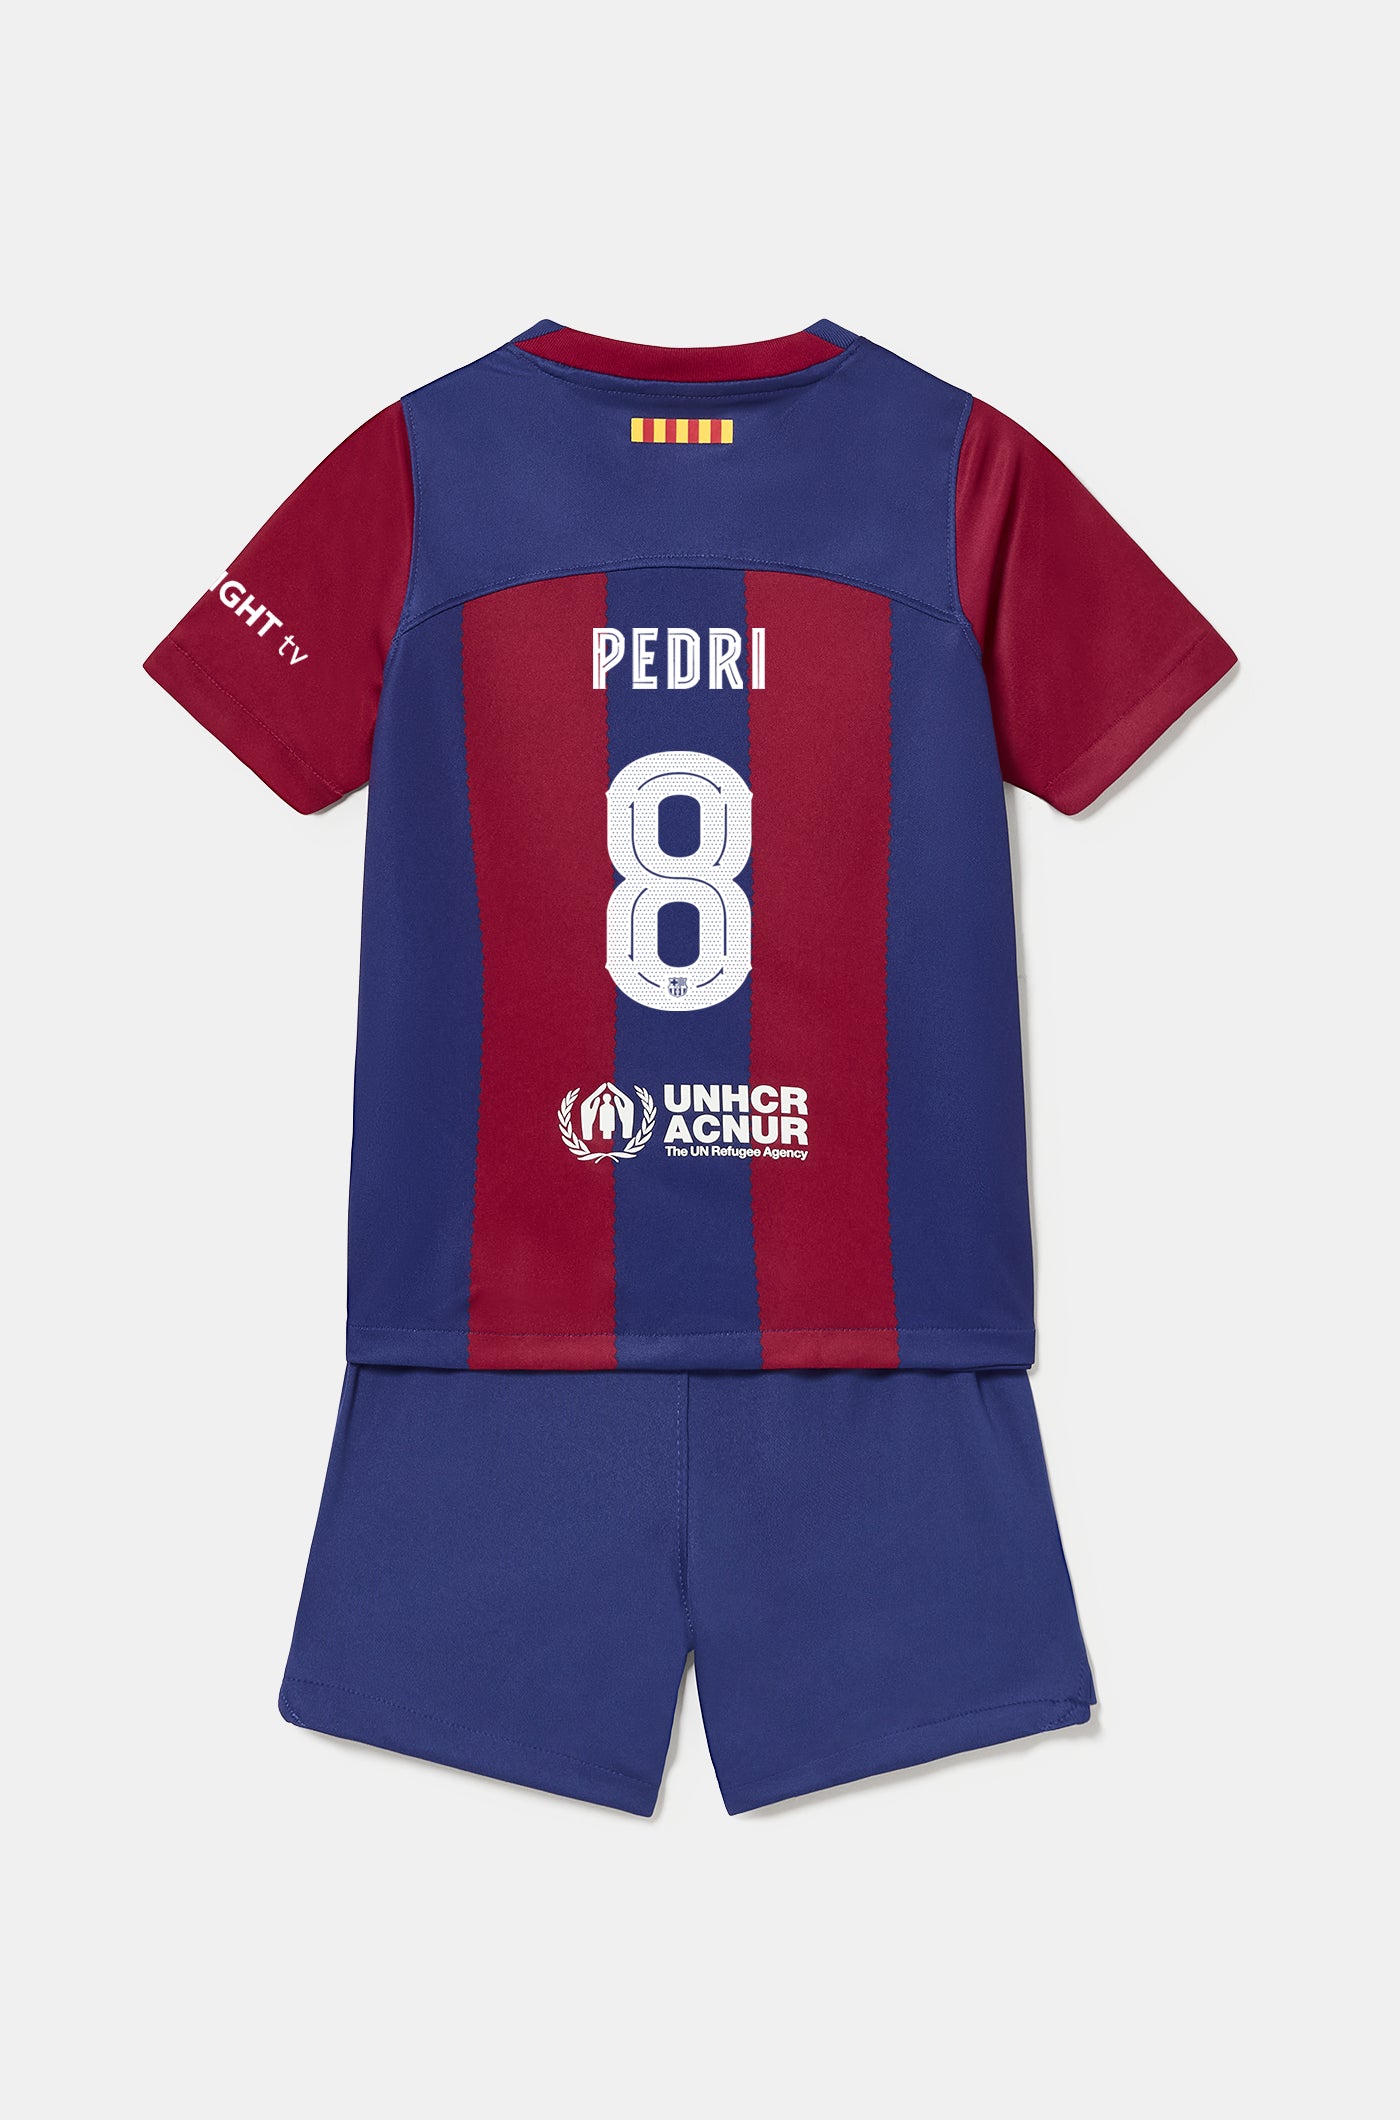 Camiseta Nike Barcelona mujer Pedri 2023 2024 DF Stadium